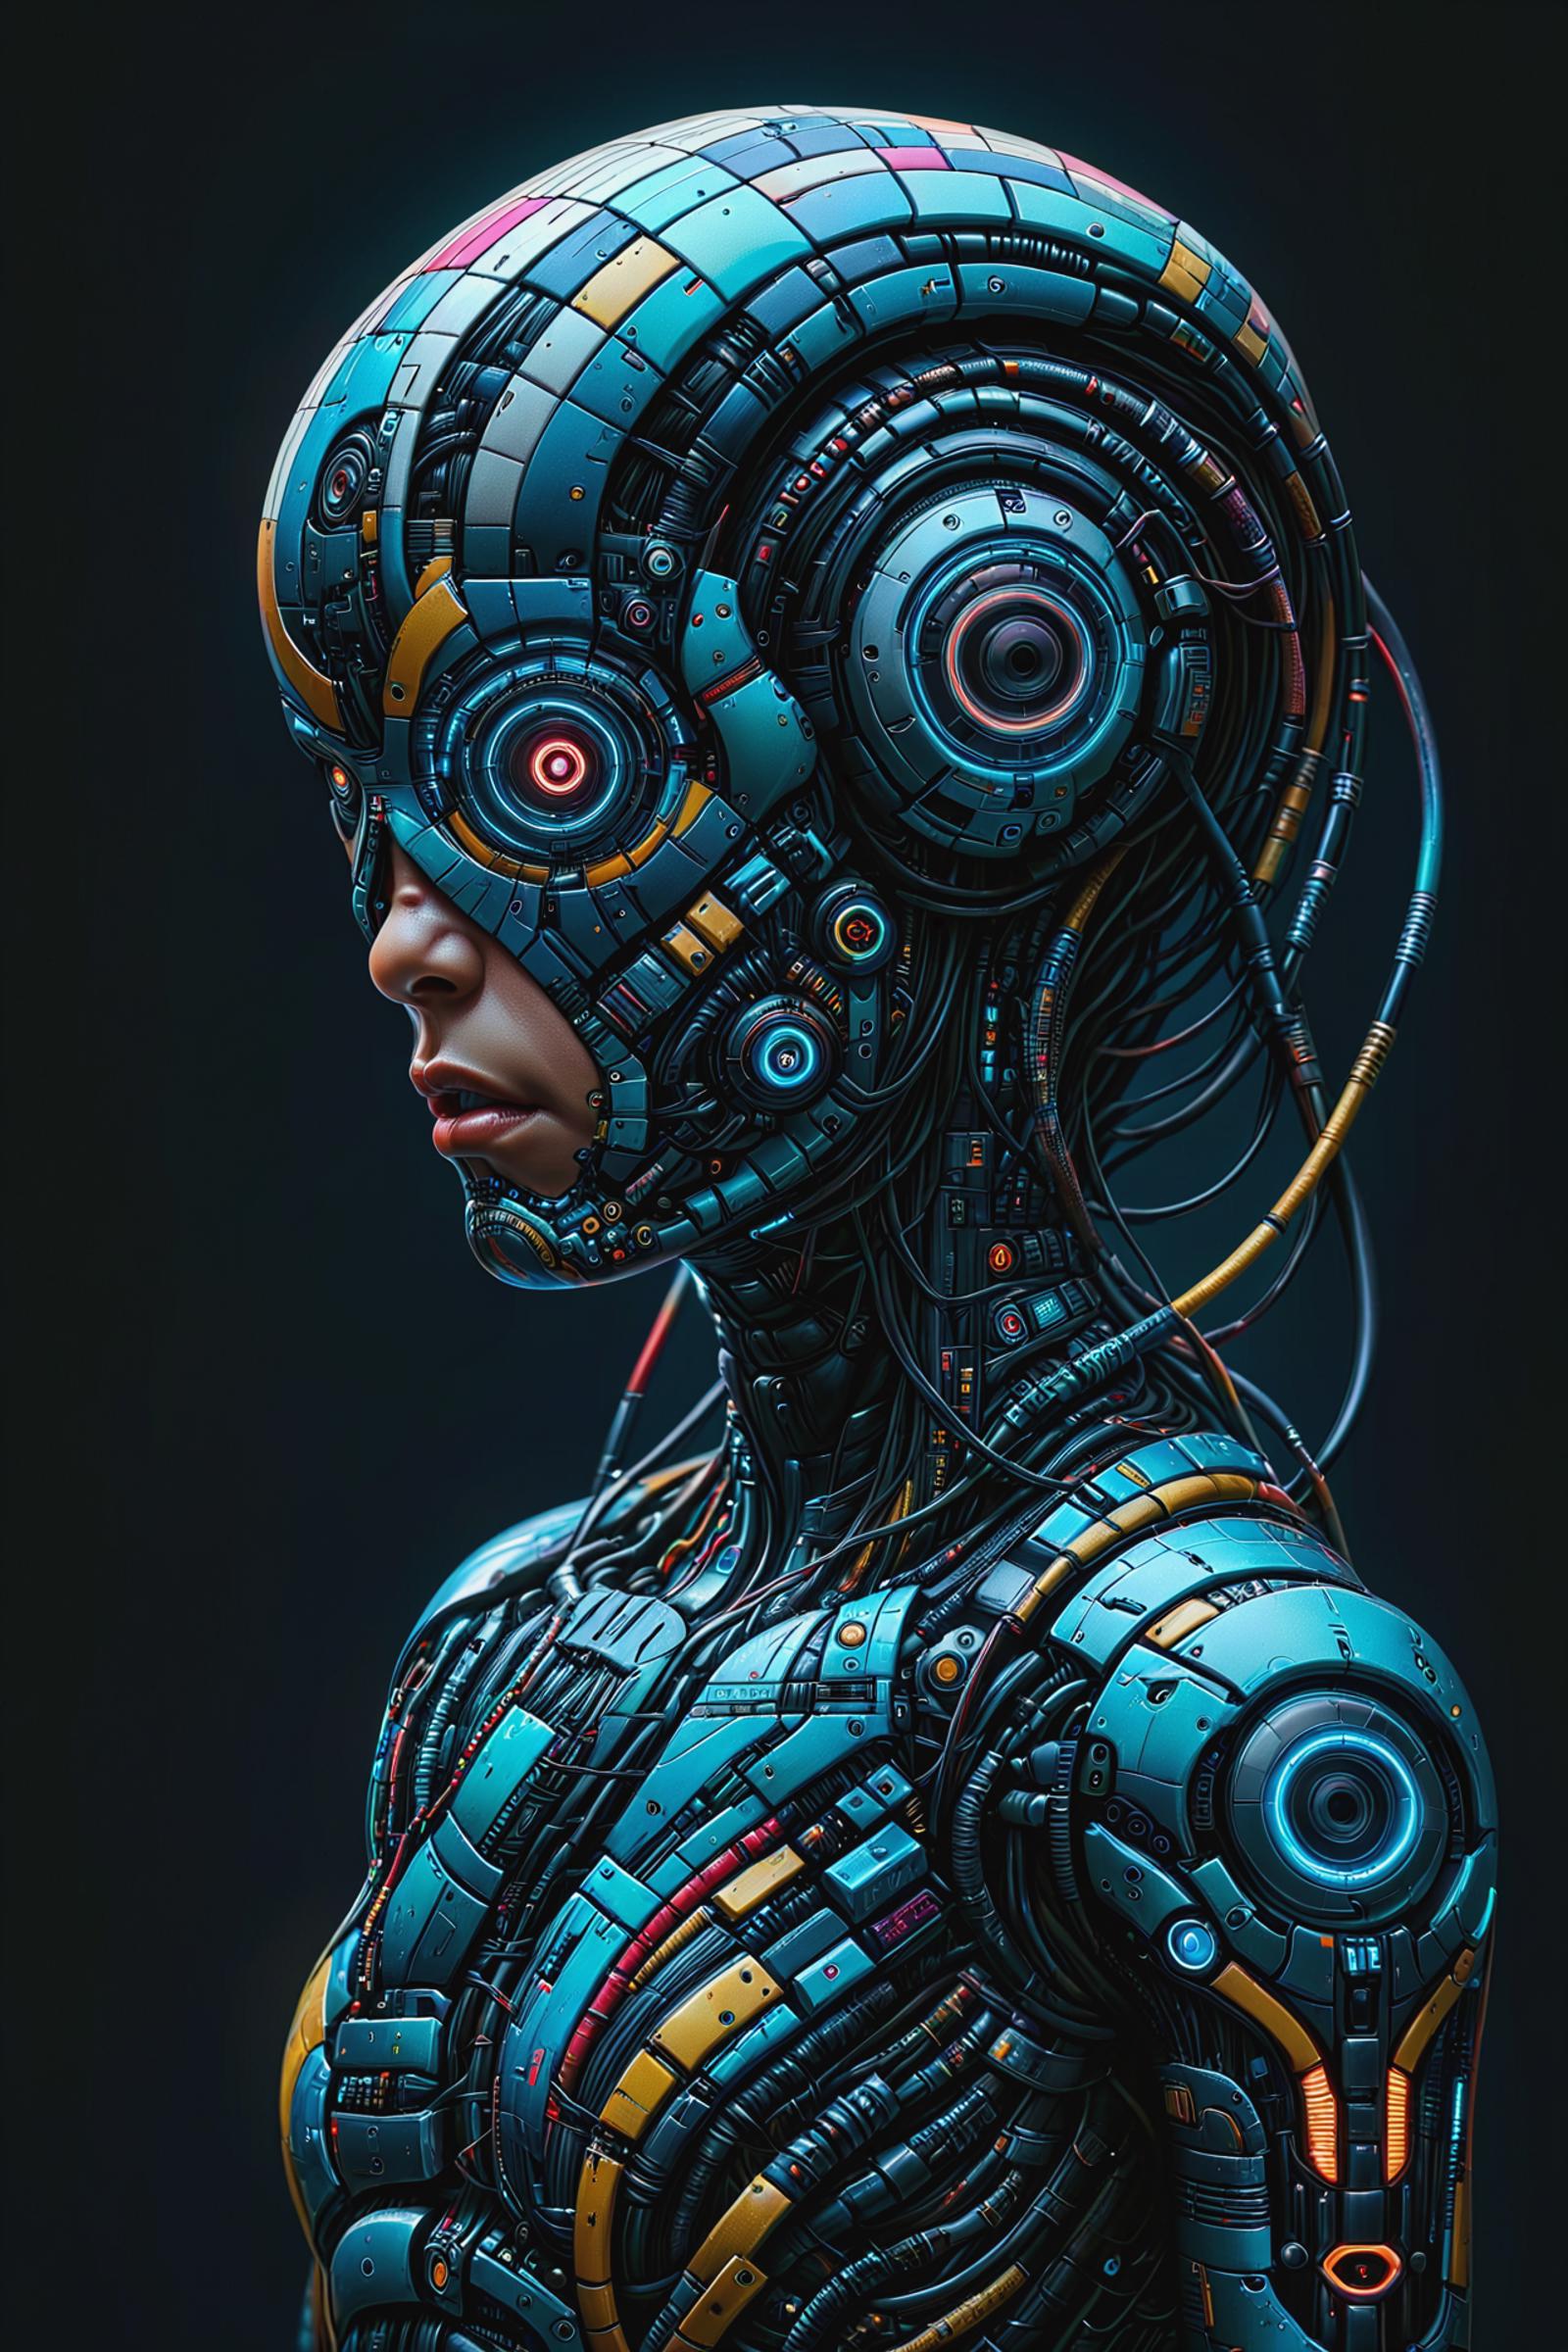 Faceless Cyborgs image by maDcaDDie